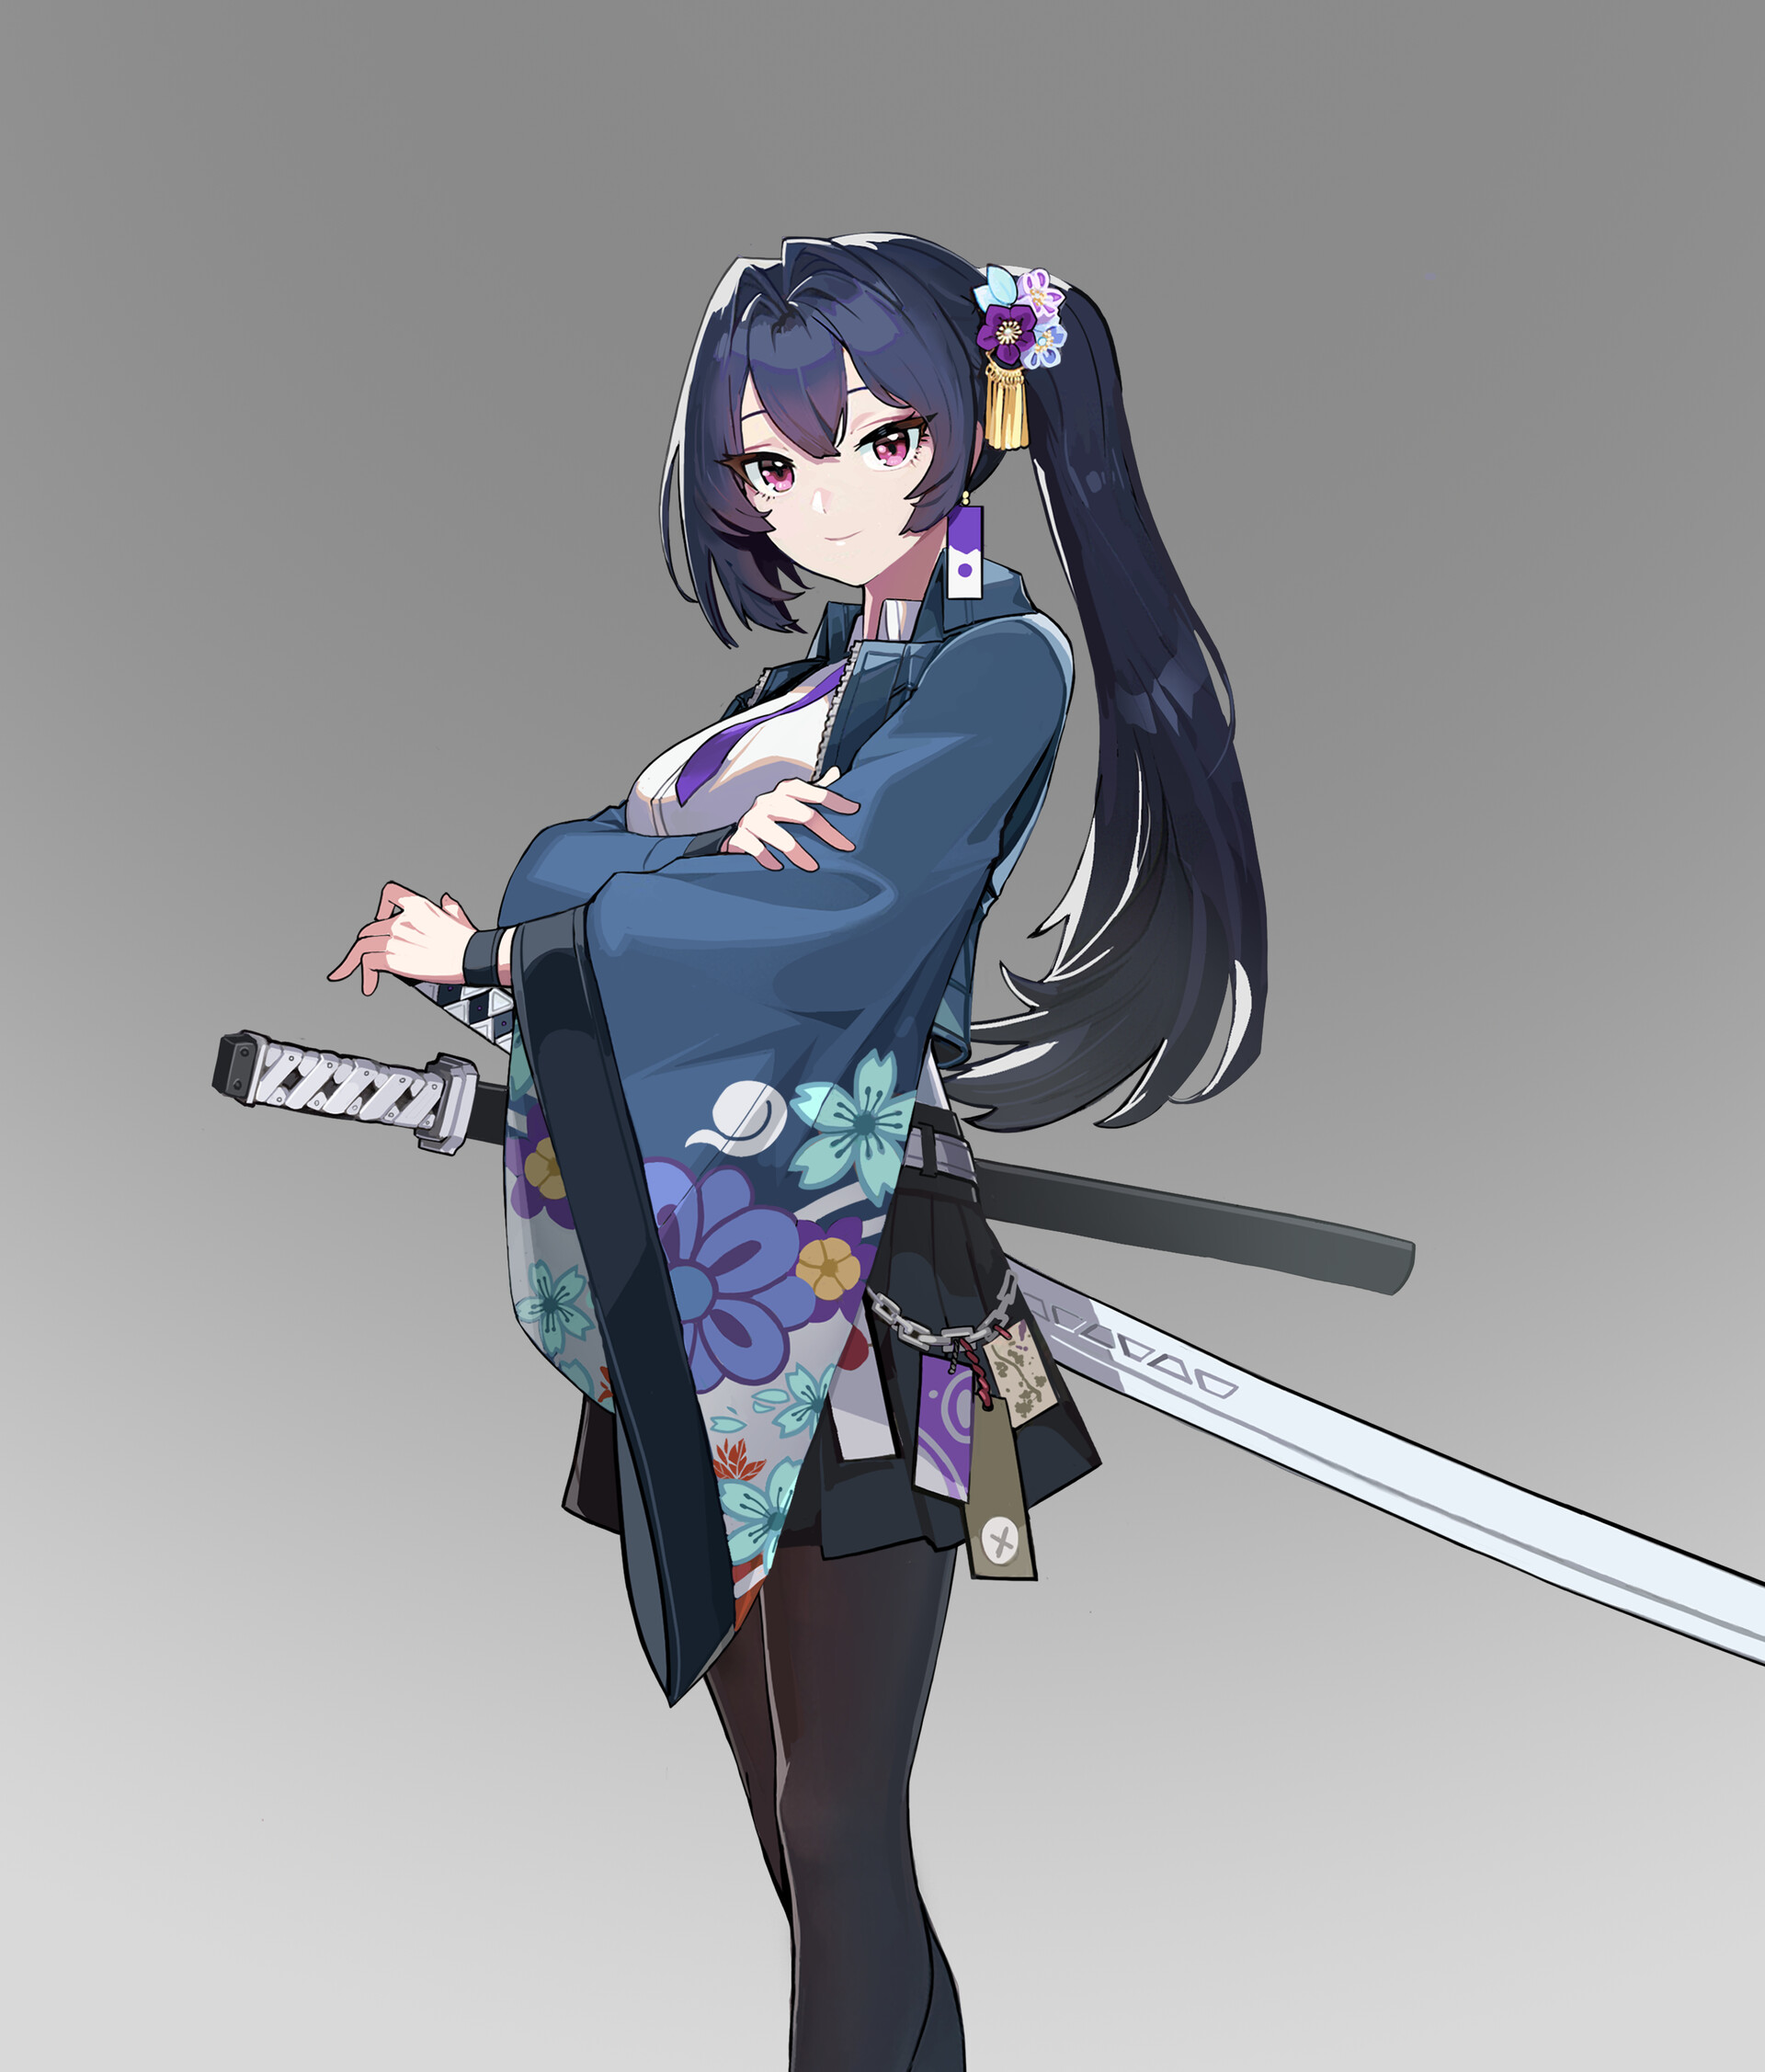 ArtStation - Samurai_Schoolgirl